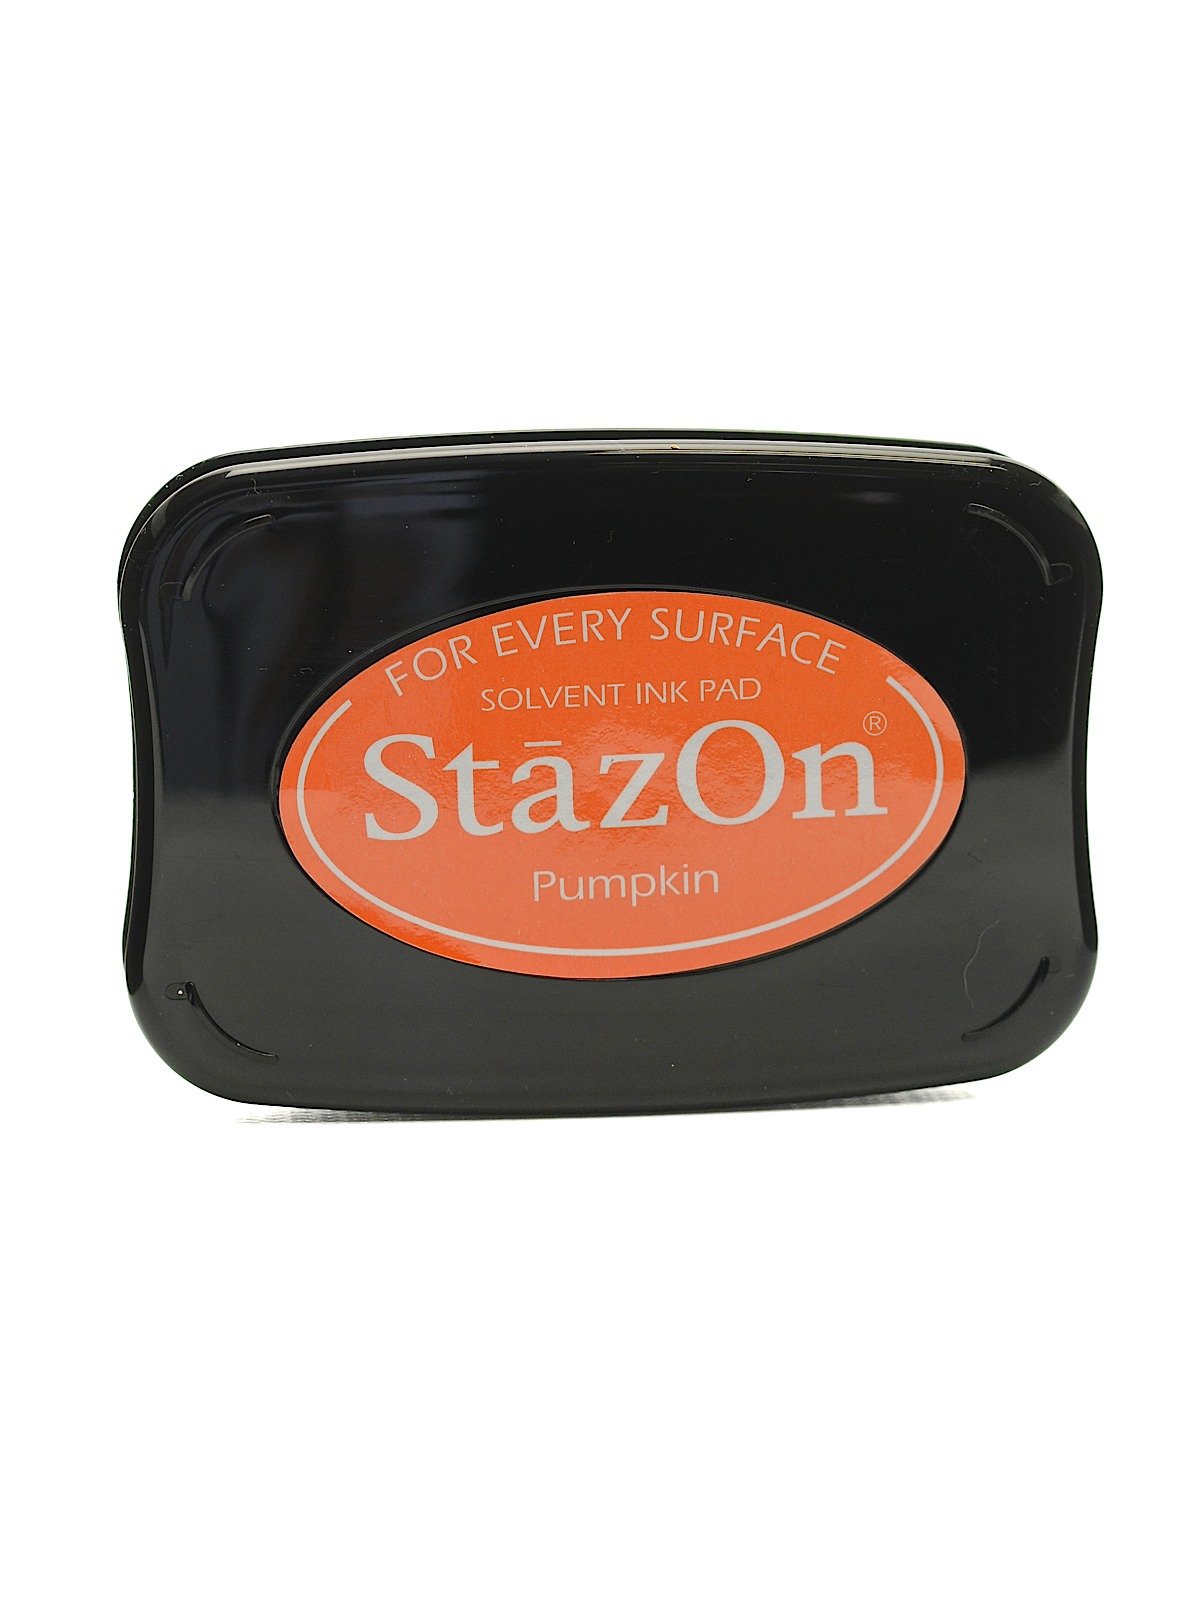 Stazon Black Cherry Ink Pad 